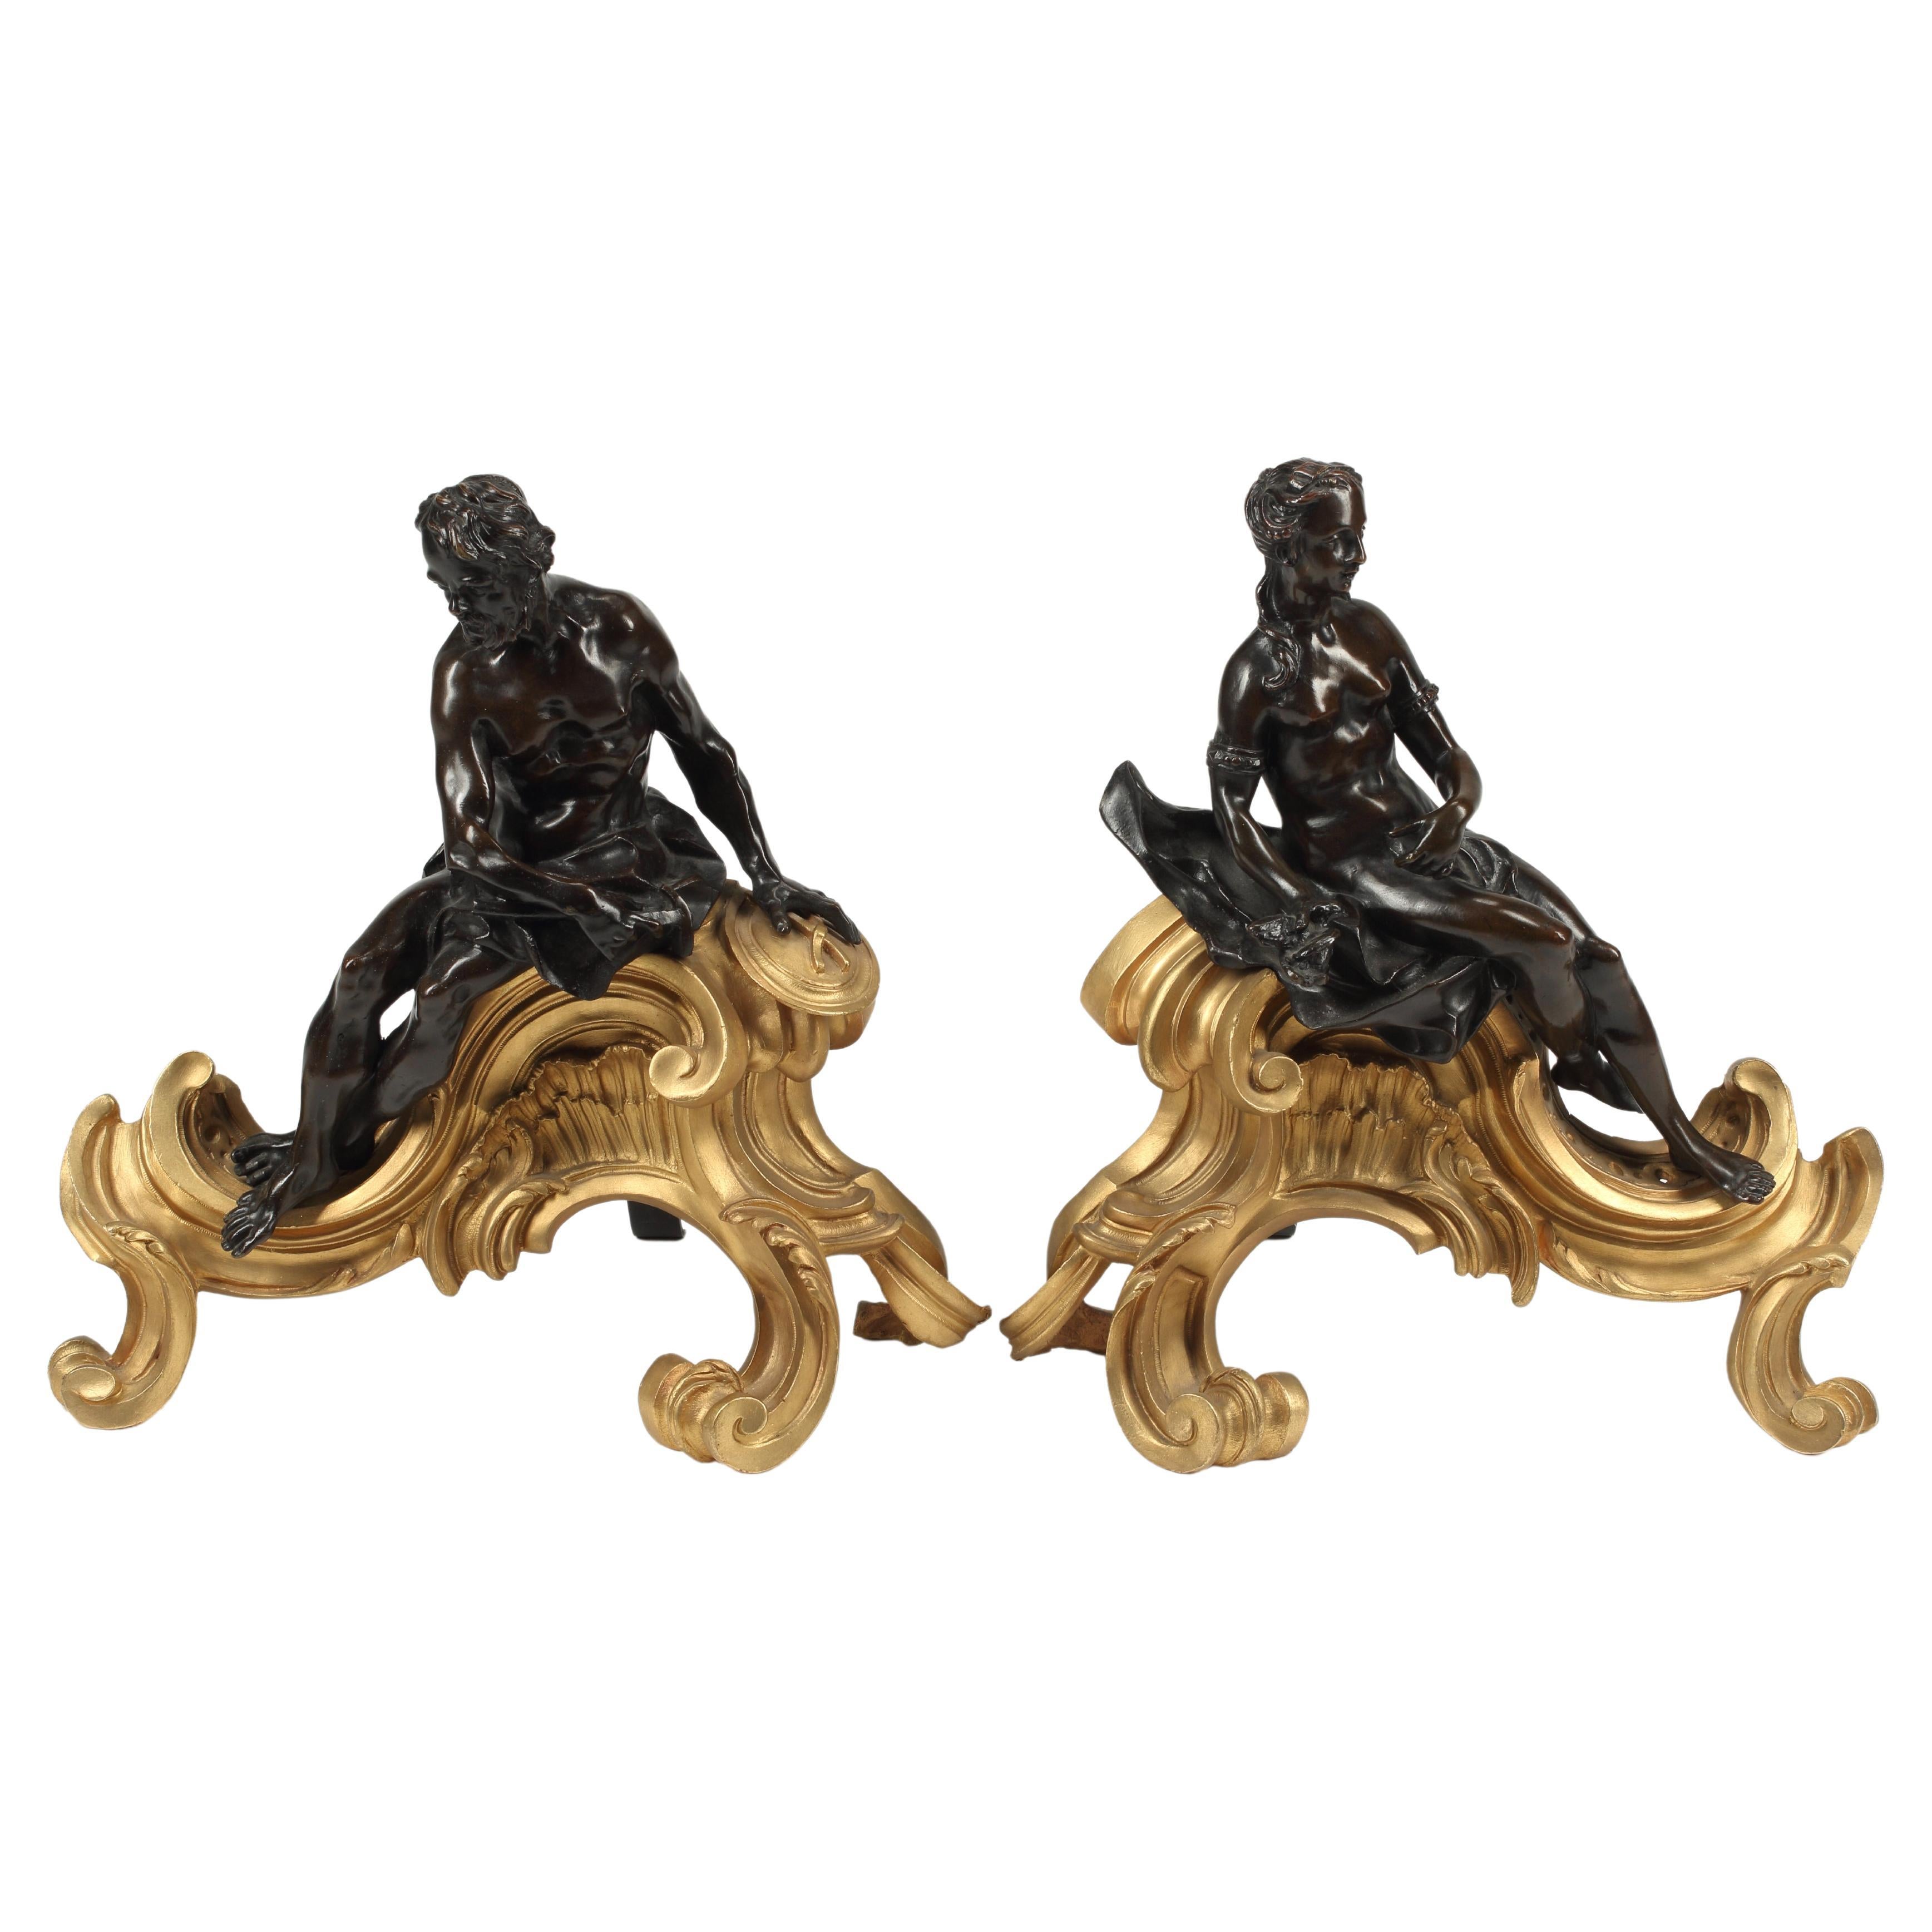 Pair Bronze Chenets, French 19th Century